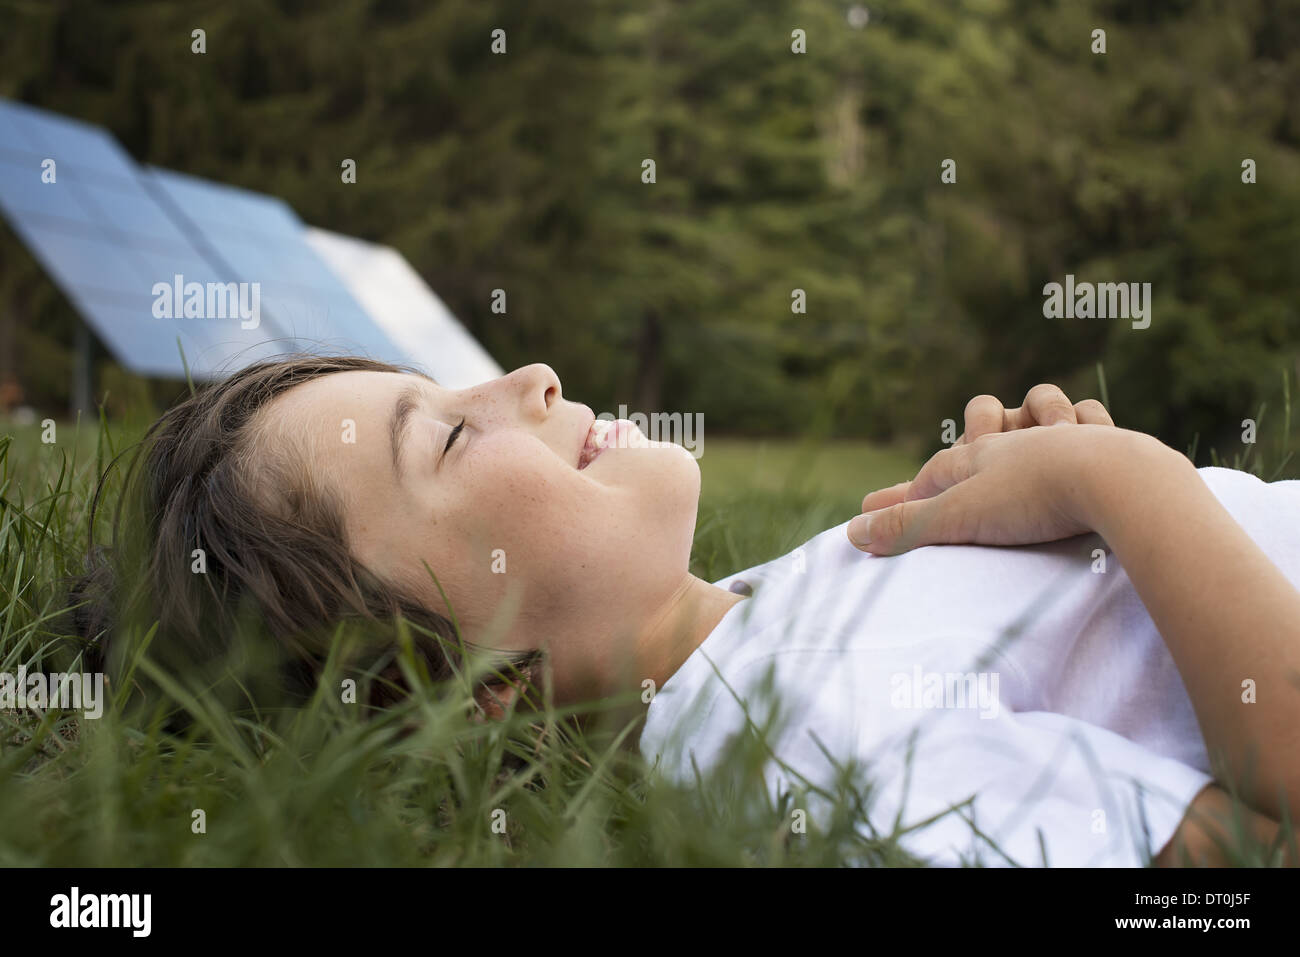 Woodstock New York USA boy lying in the grass beside solar panel Stock Photo